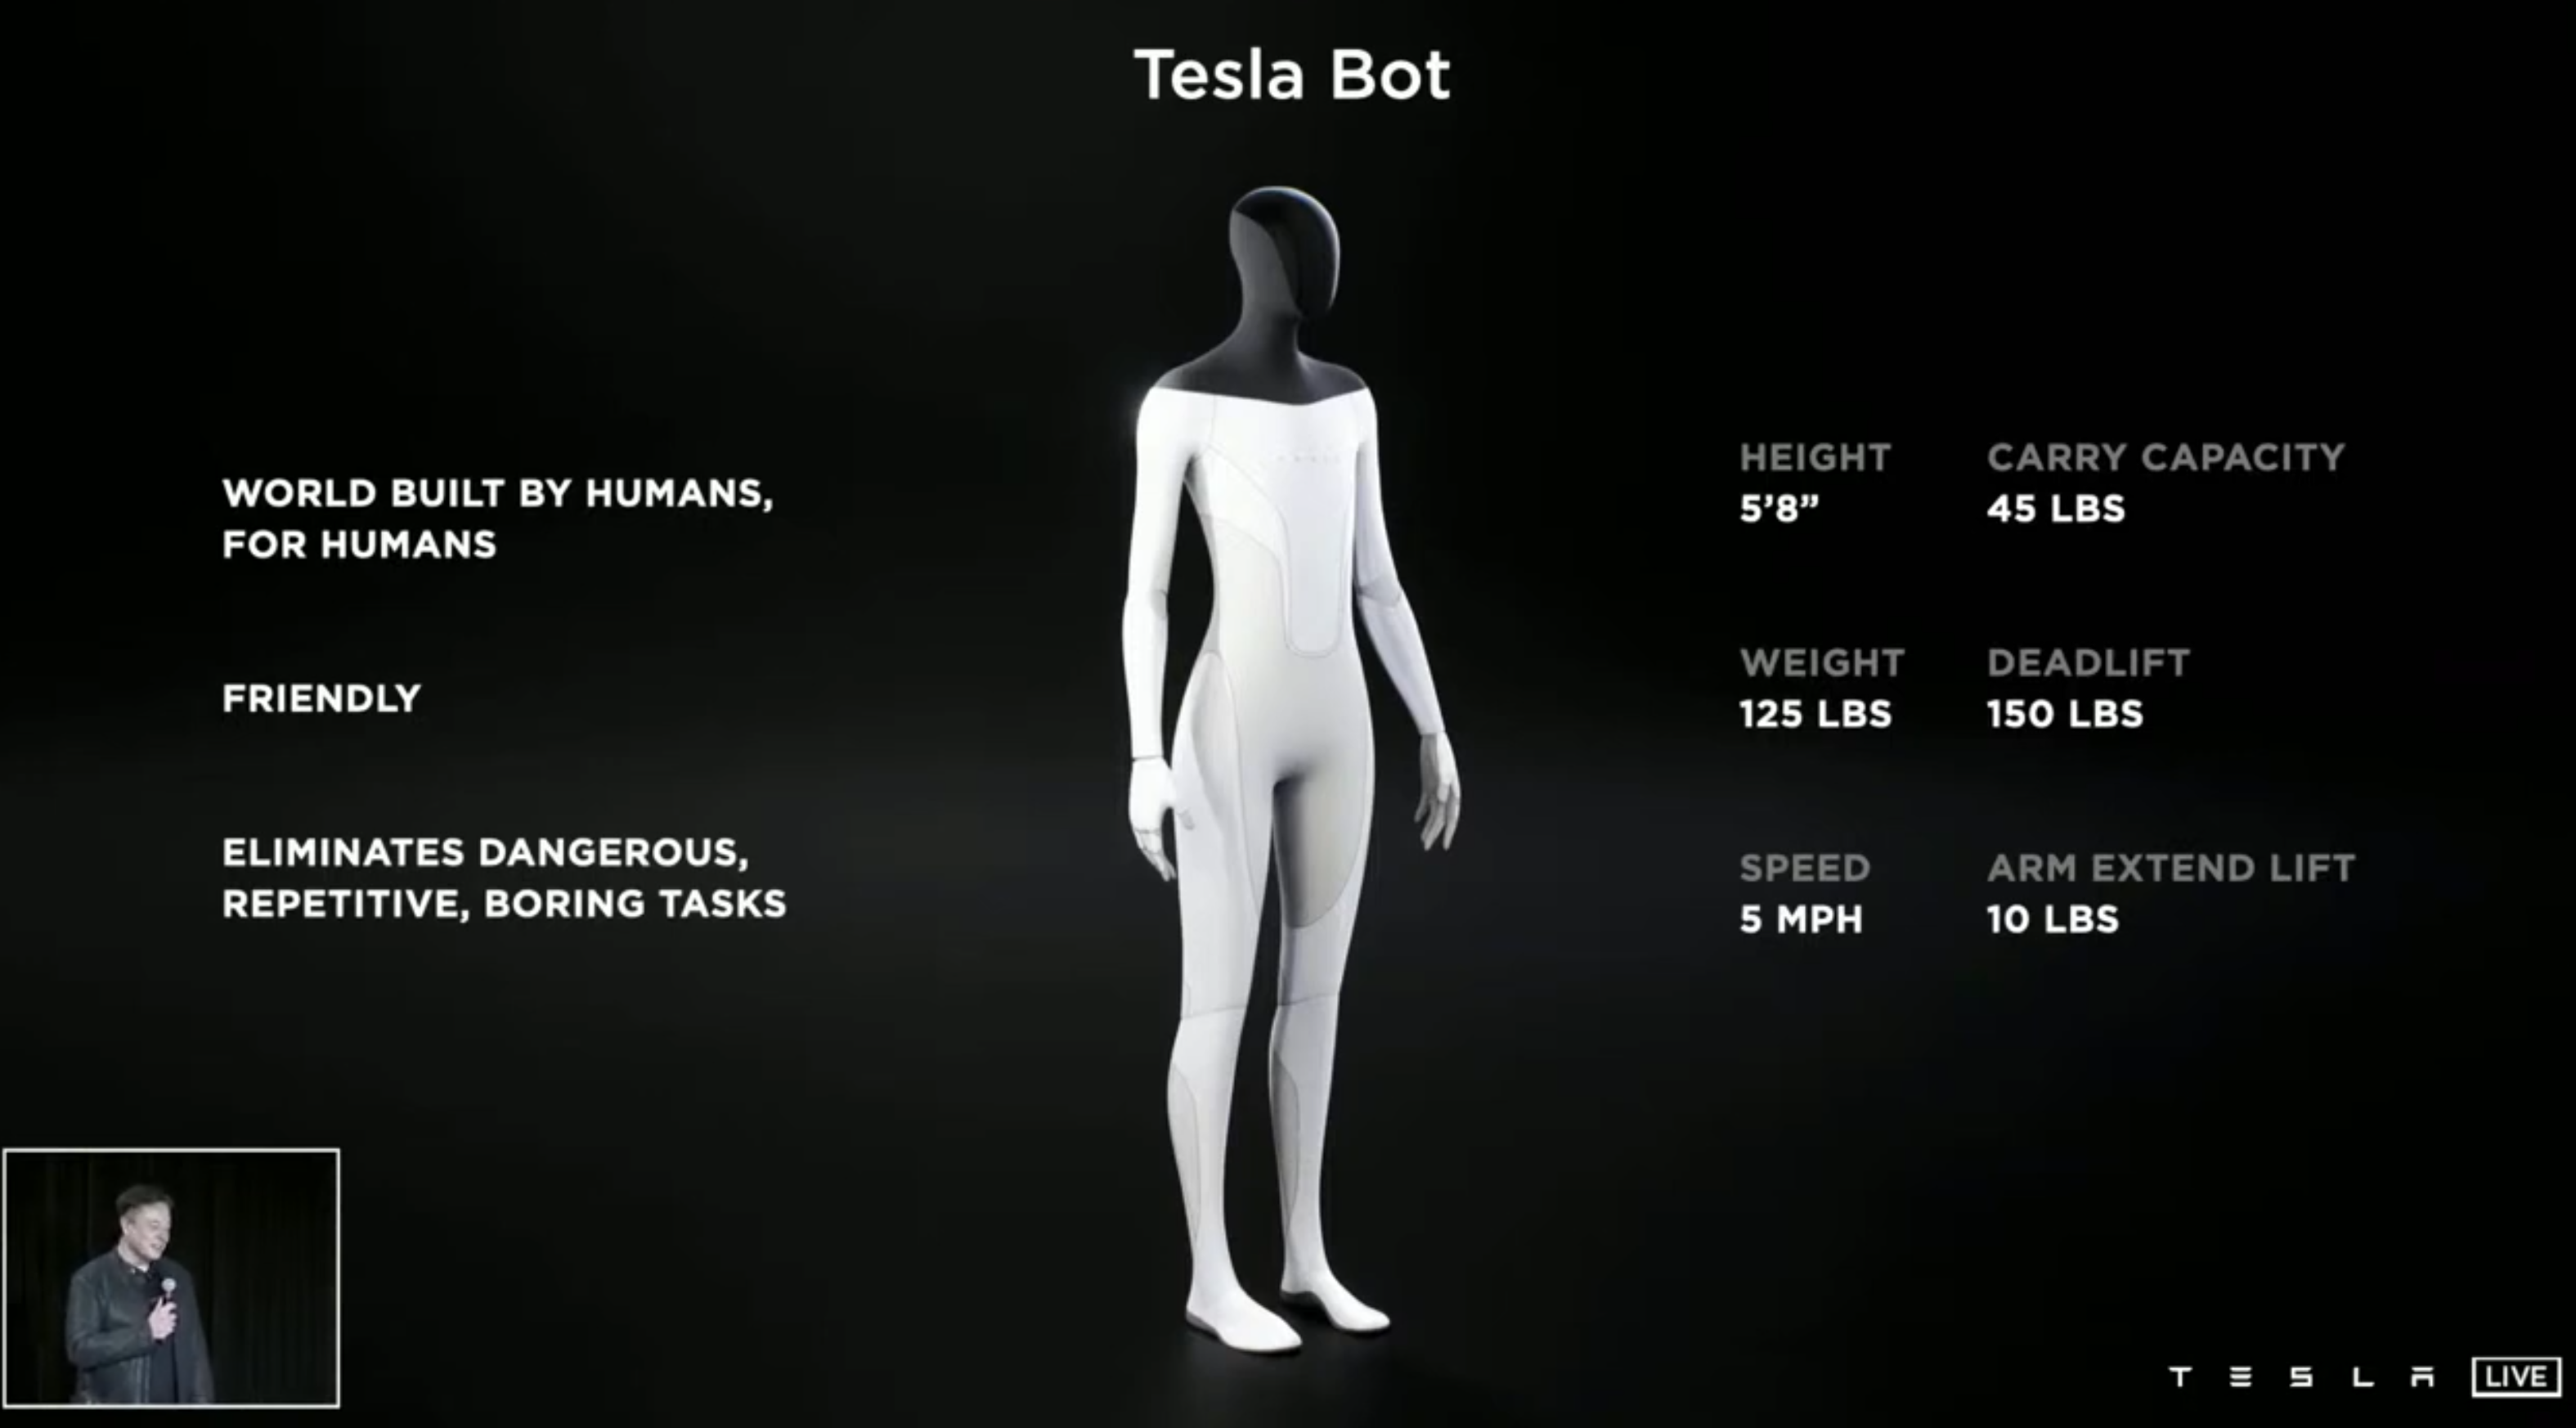 Tesla Bot details